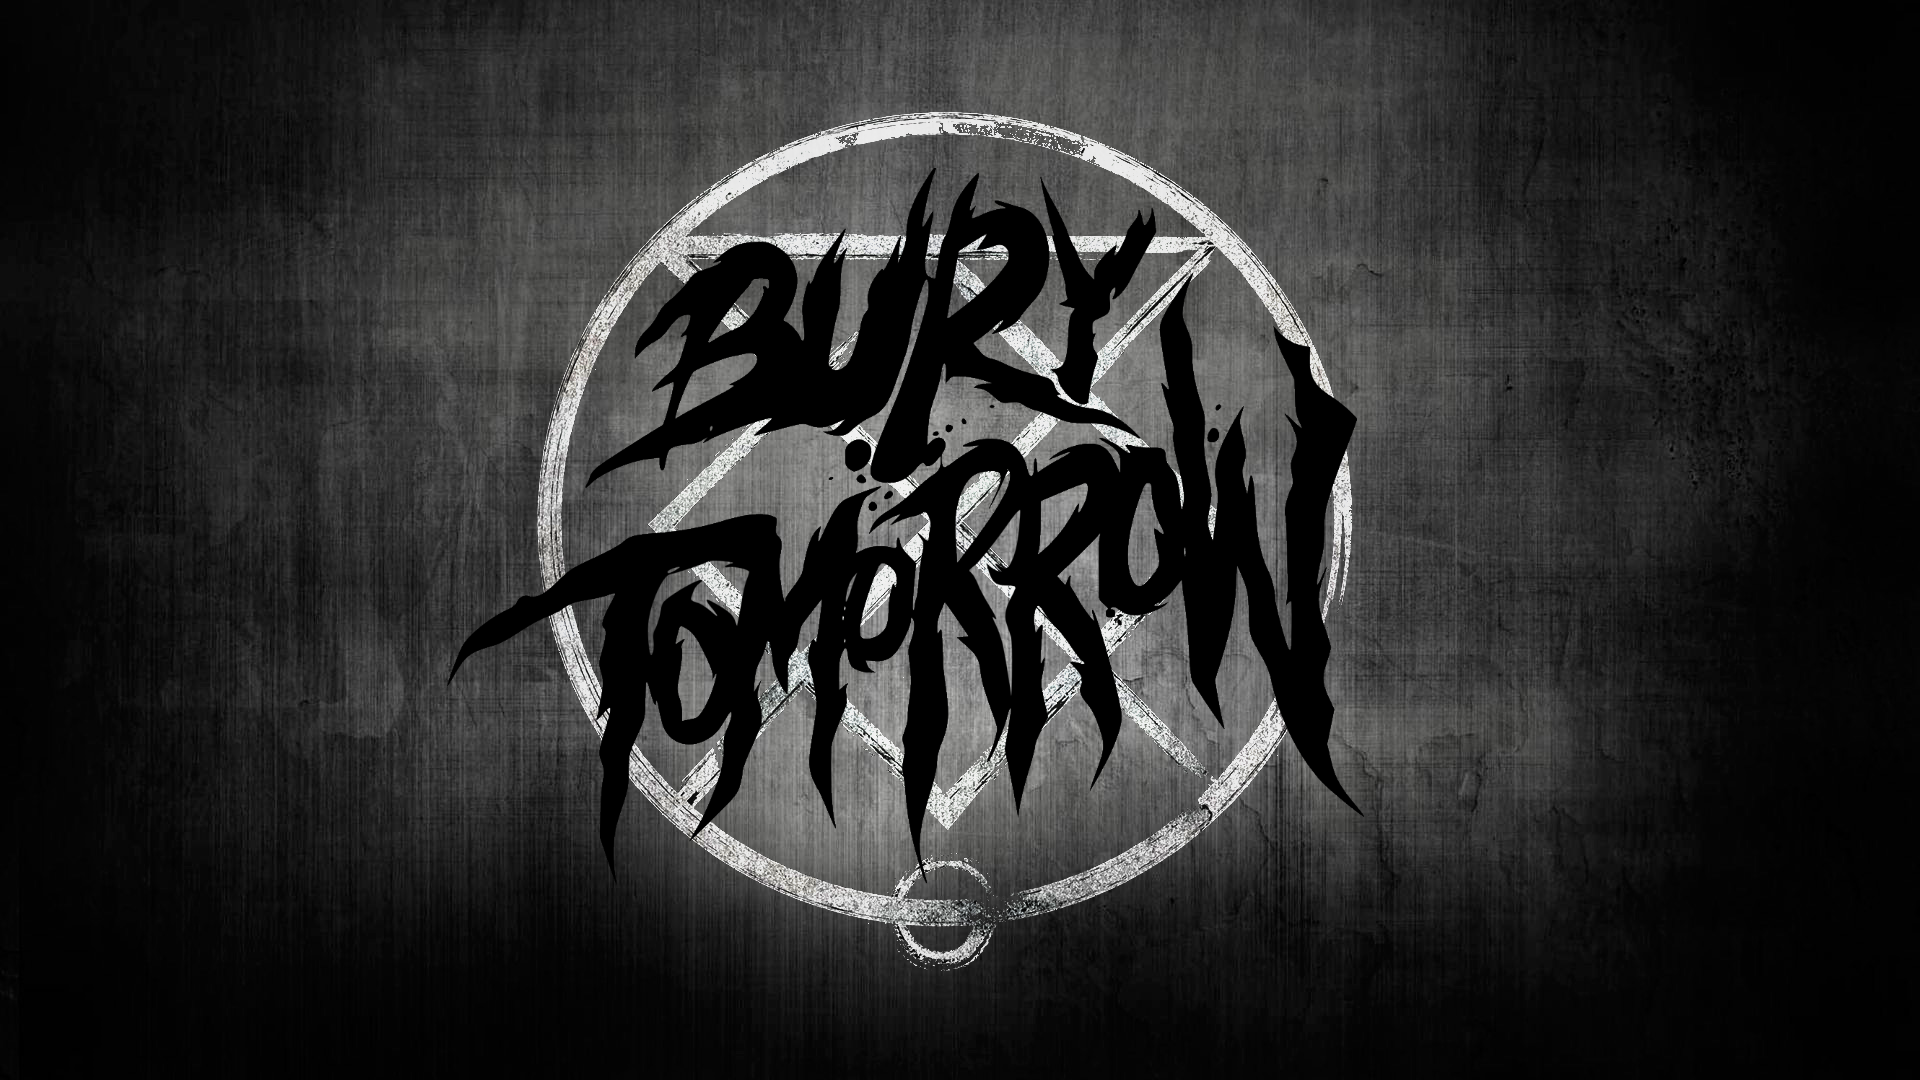 Bury Tomorrow Wallpaper 48760 1920x1080px